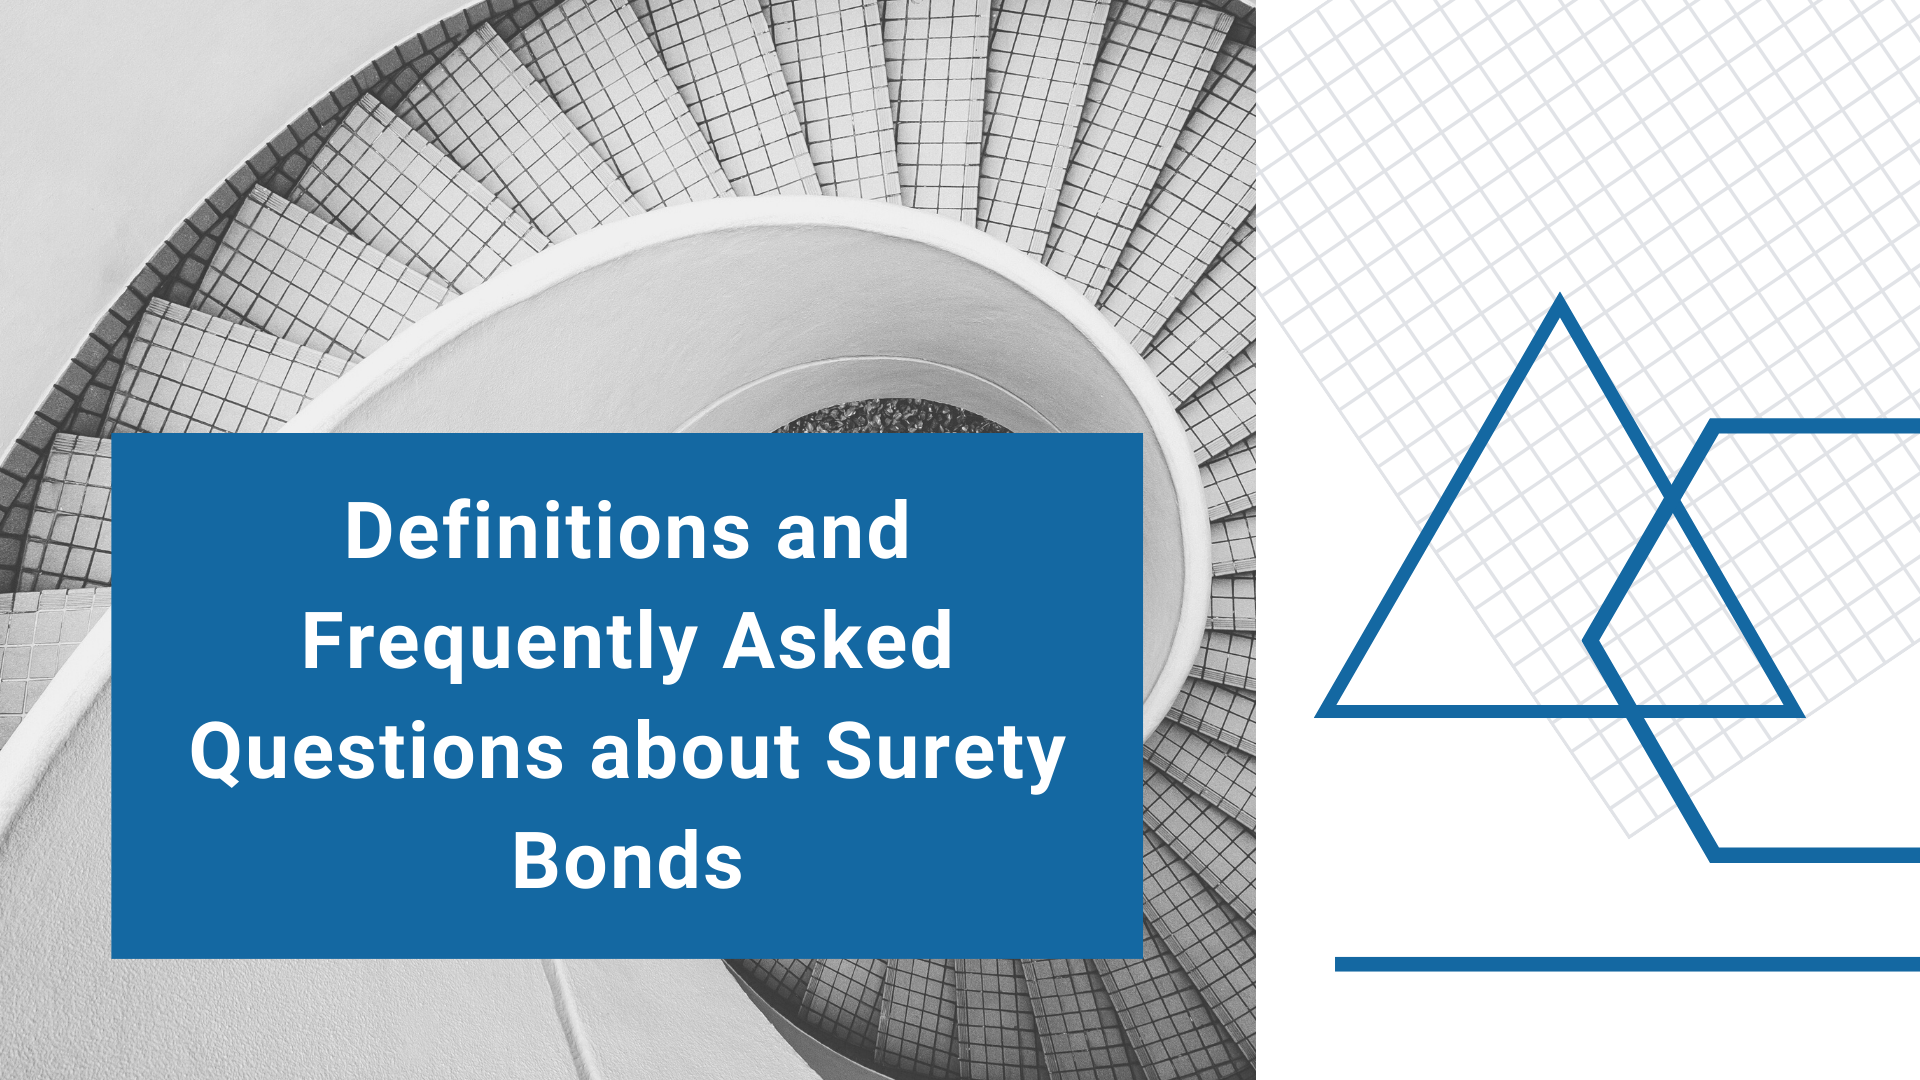 surety bond - What is the definition of a surety bond - spiral stair